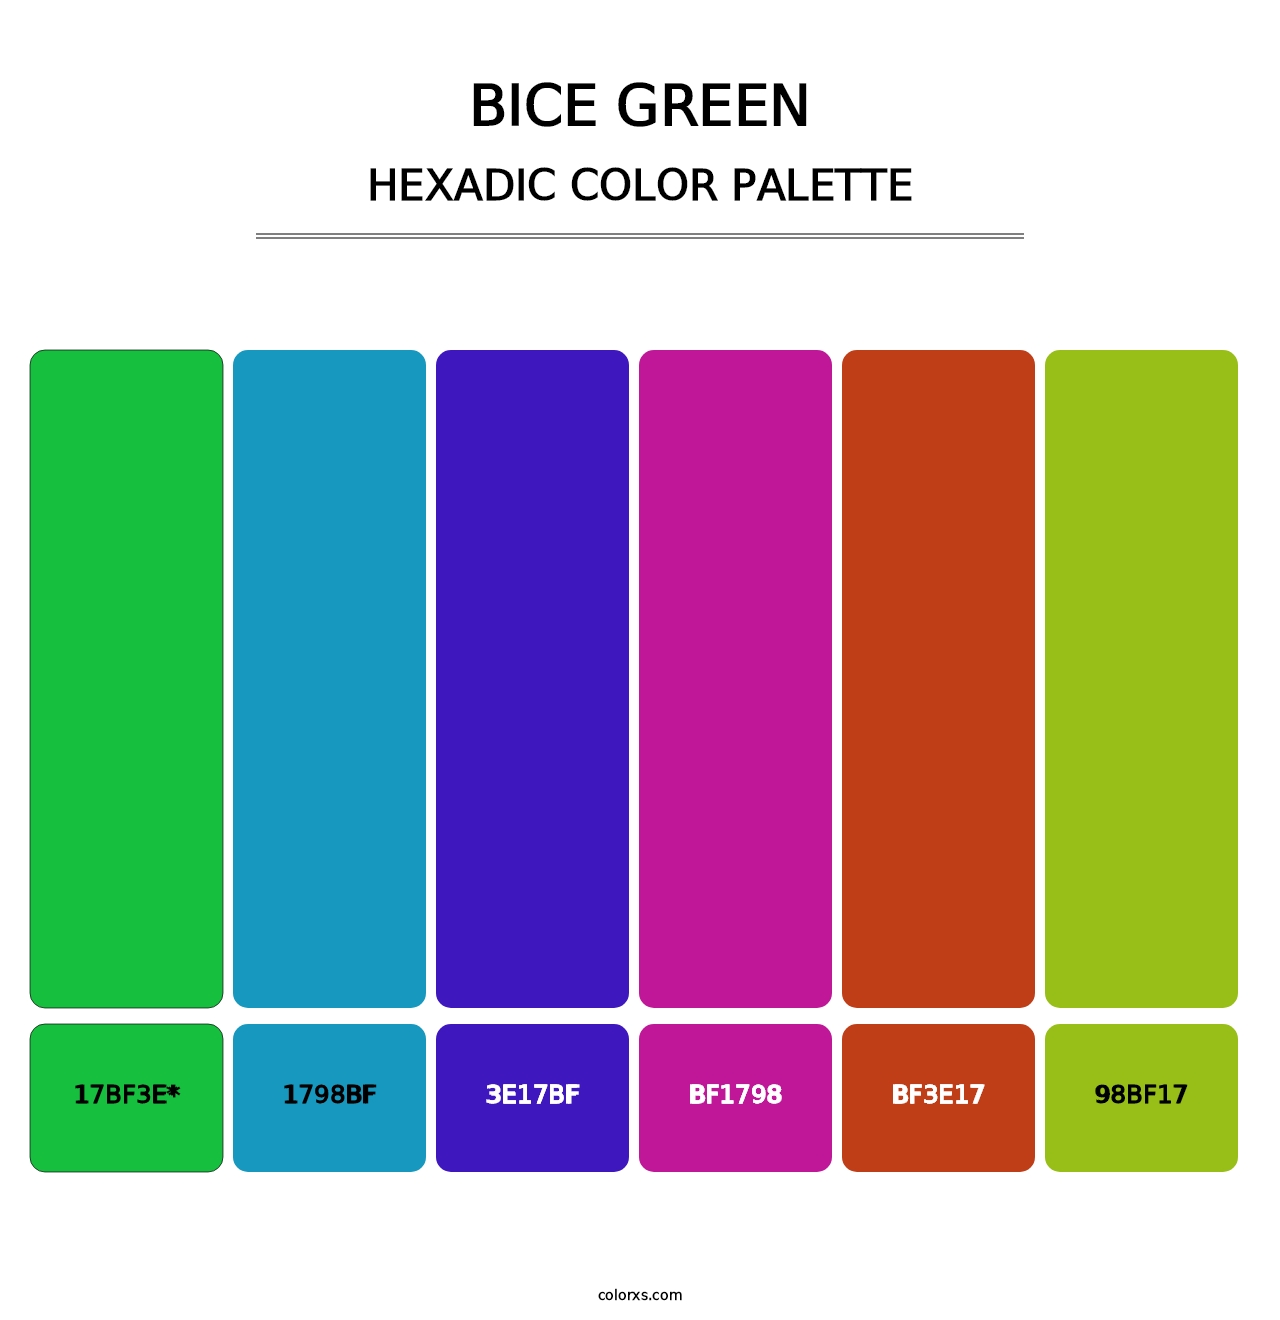 Bice Green - Hexadic Color Palette